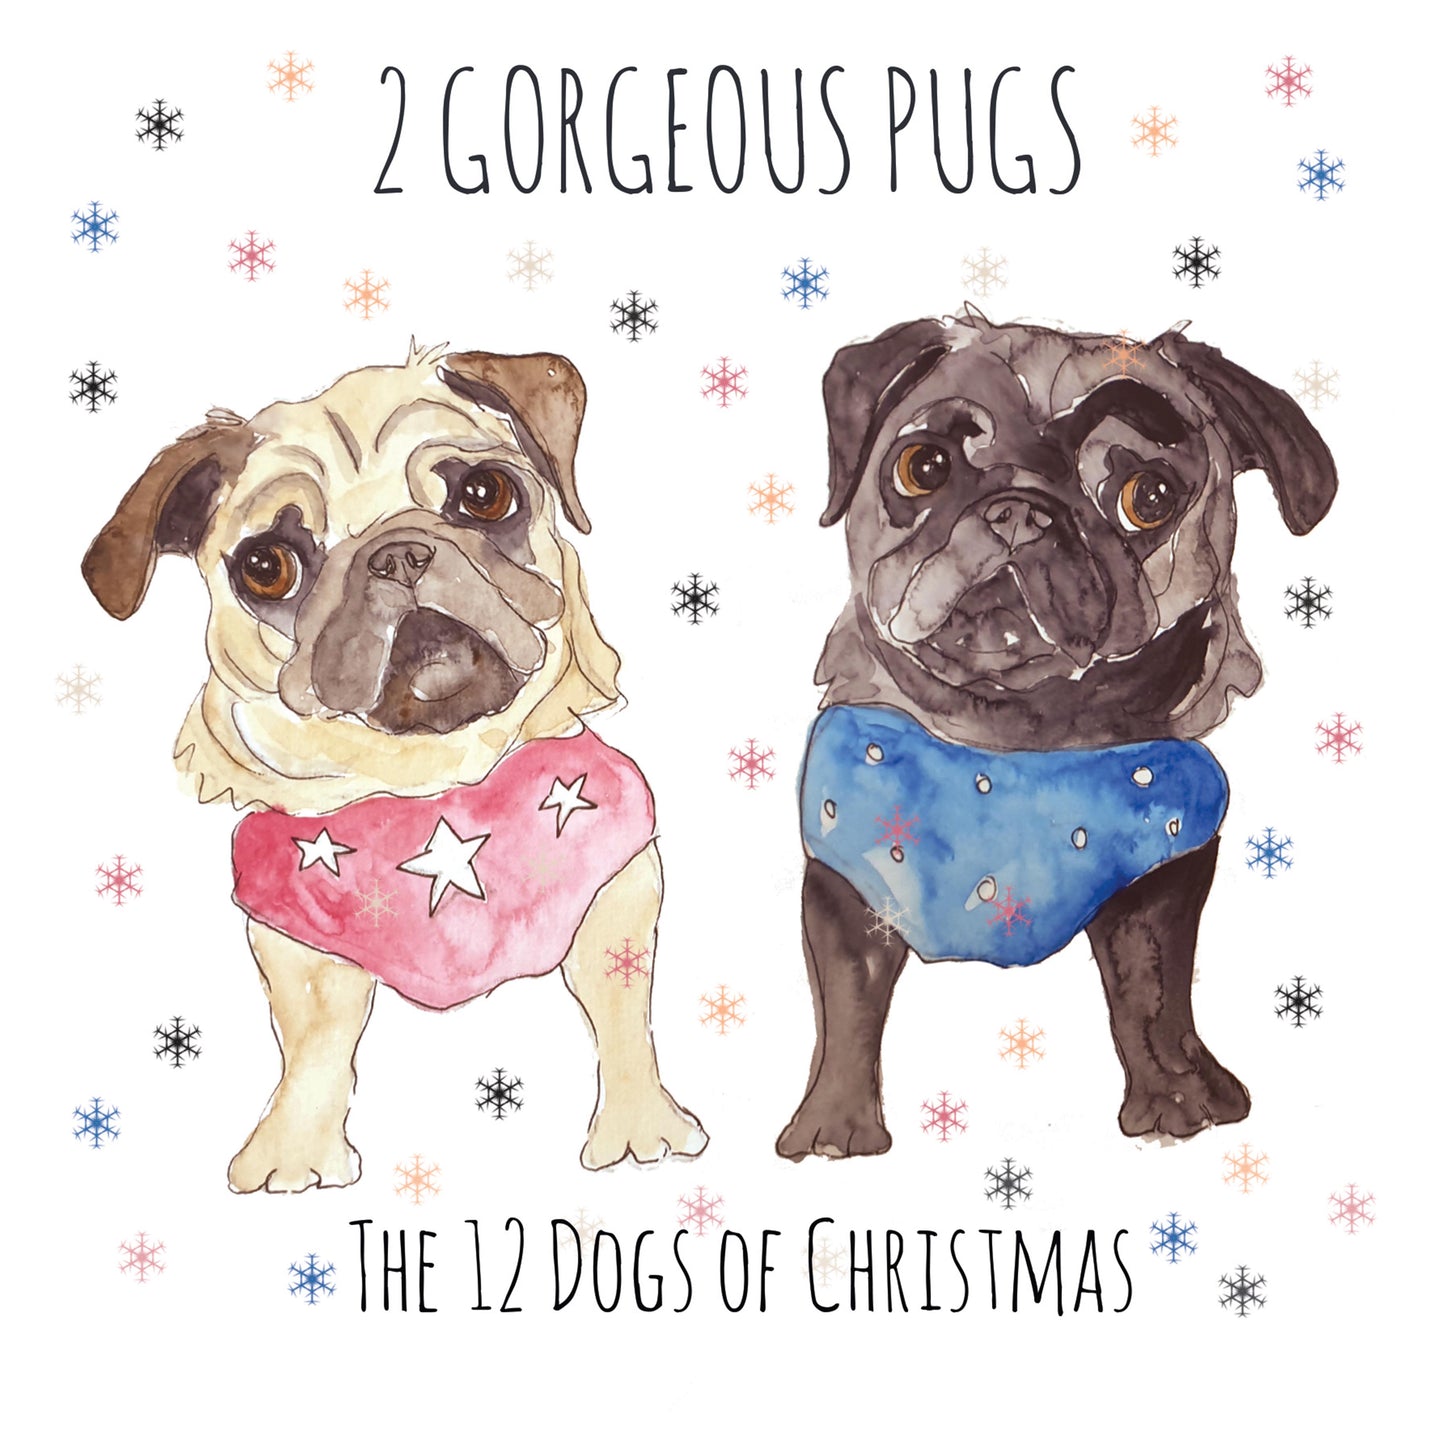 2 Gorgeous Pugs - Greeting Card